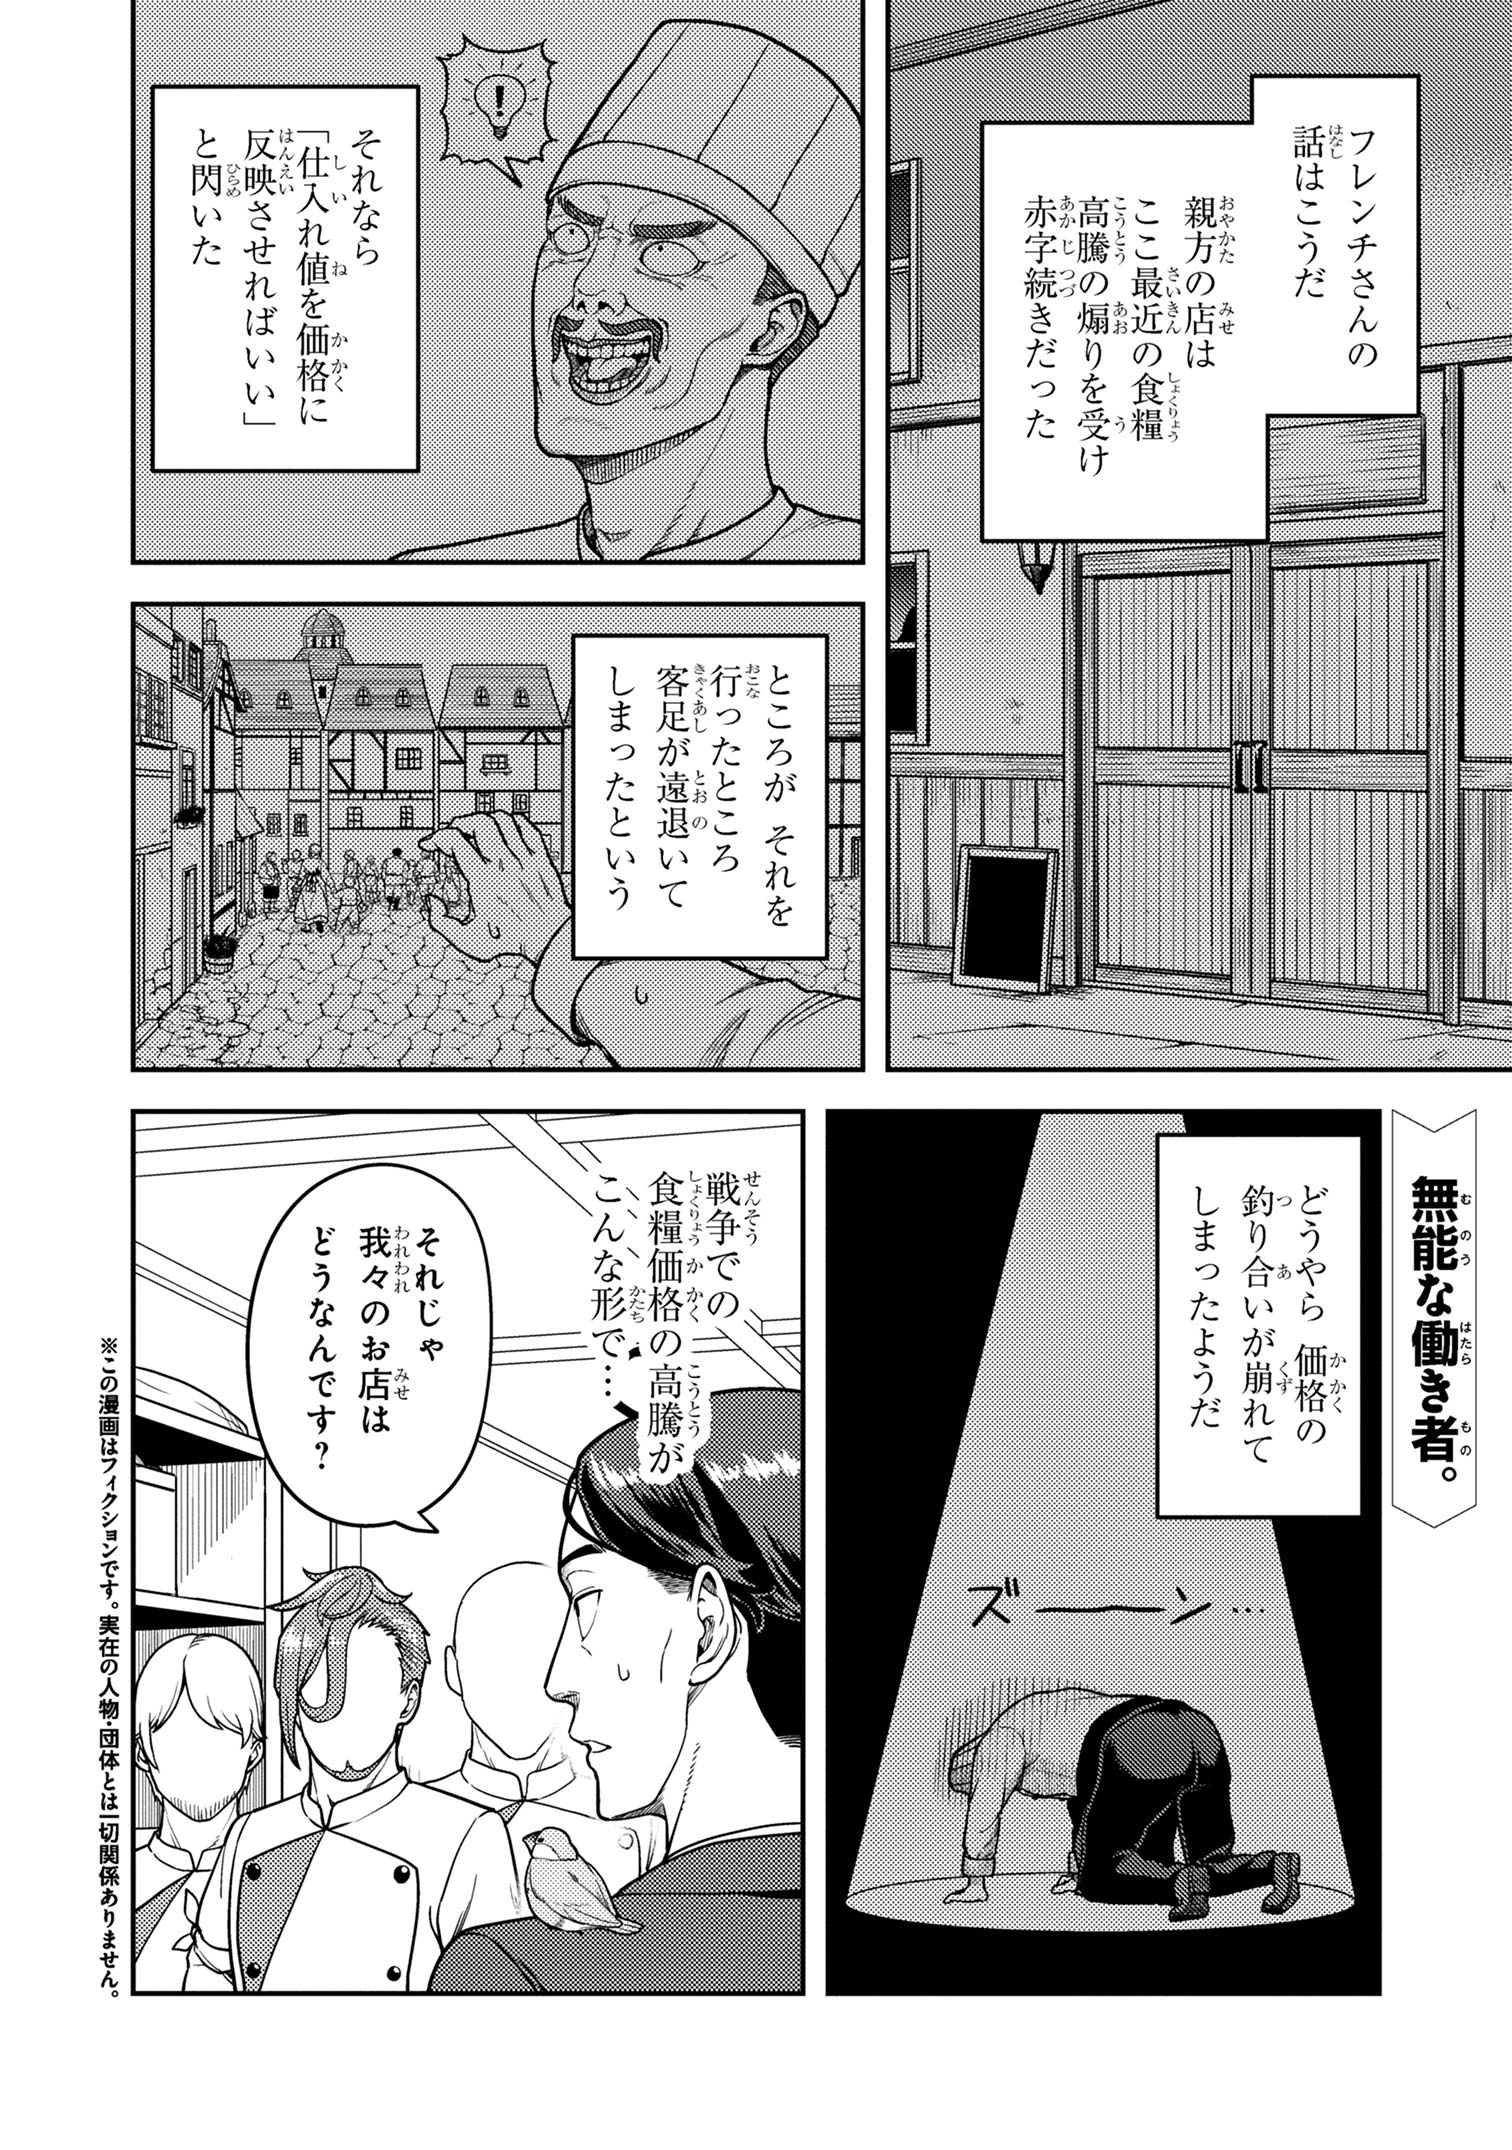 Sasaki to Pii-chan - Chapter 16.2 - Page 1